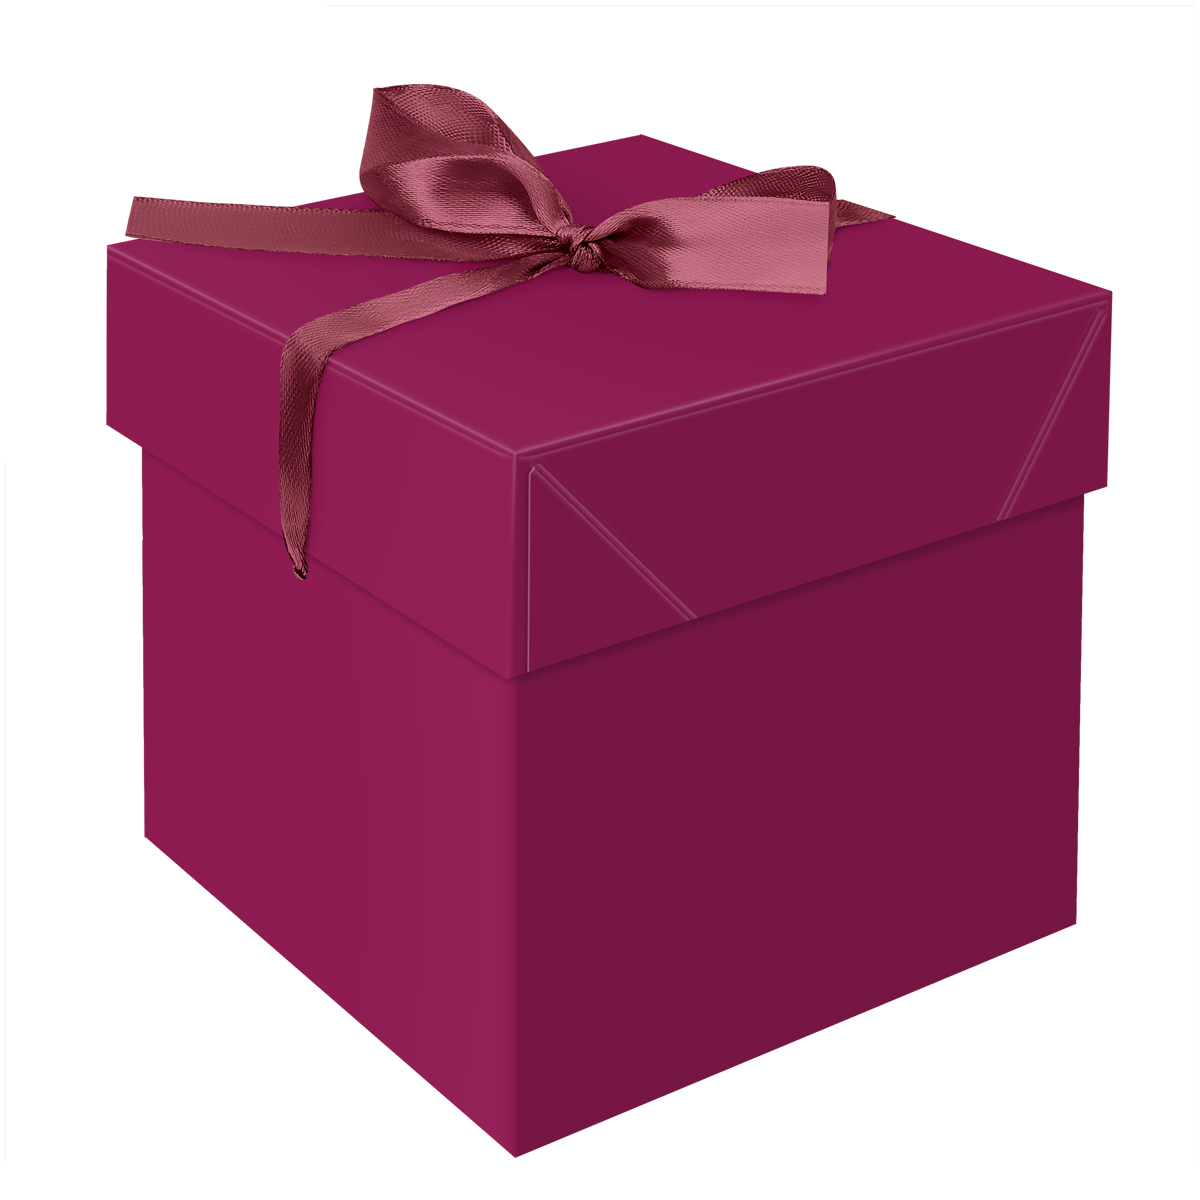 коробка складная подарочная meshu persian red 15 15 15 см с лентой Коробка складная подарочная MESHU 